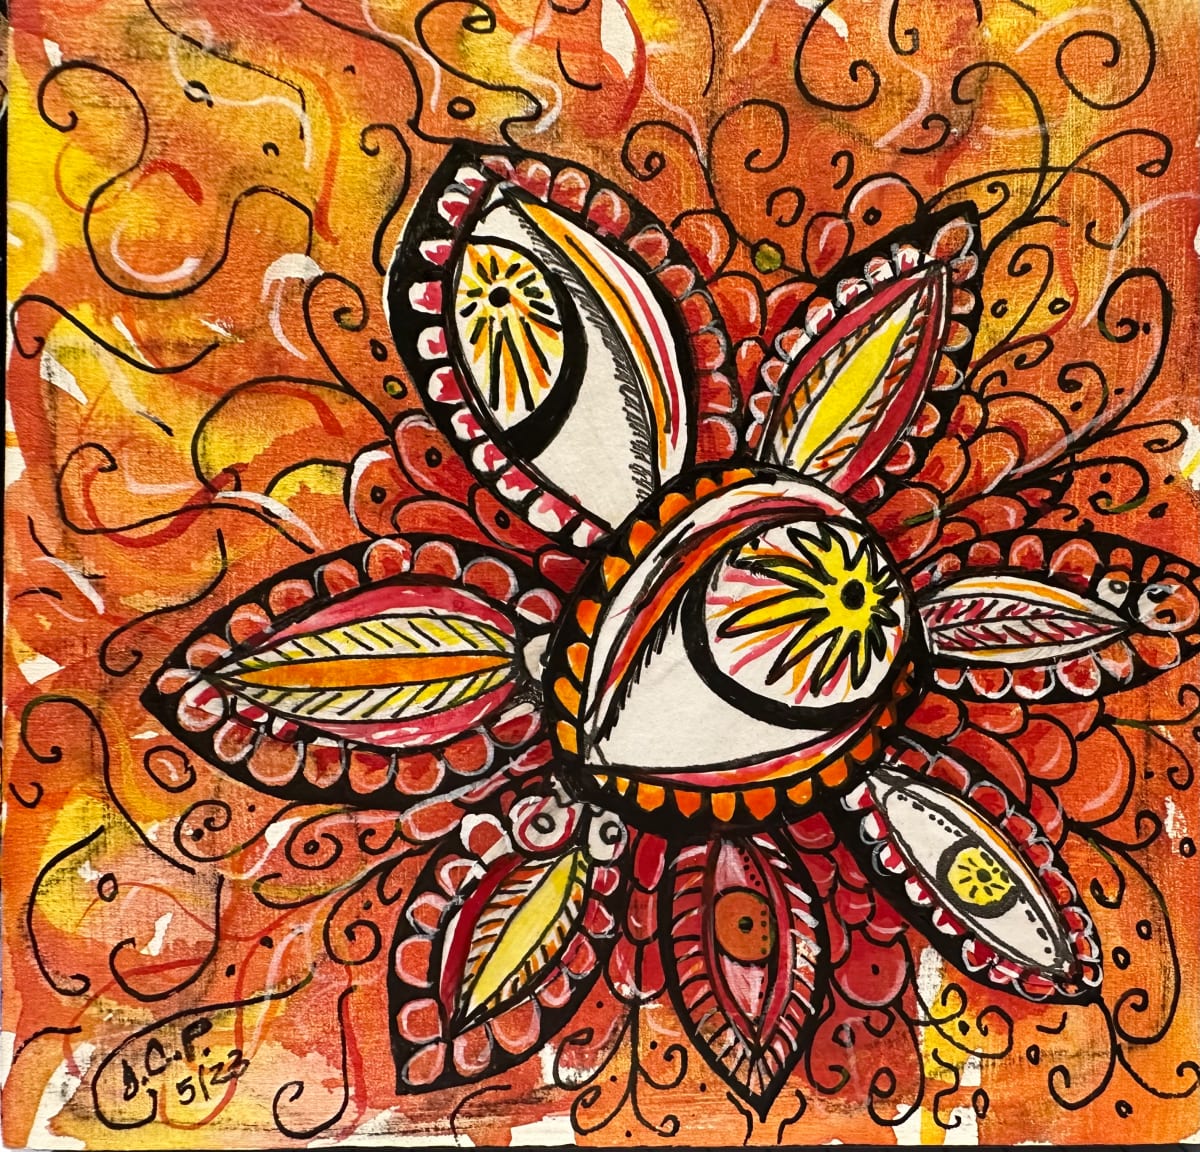 Flaming Eye Flower by Jennifer C.  Pierstorff 